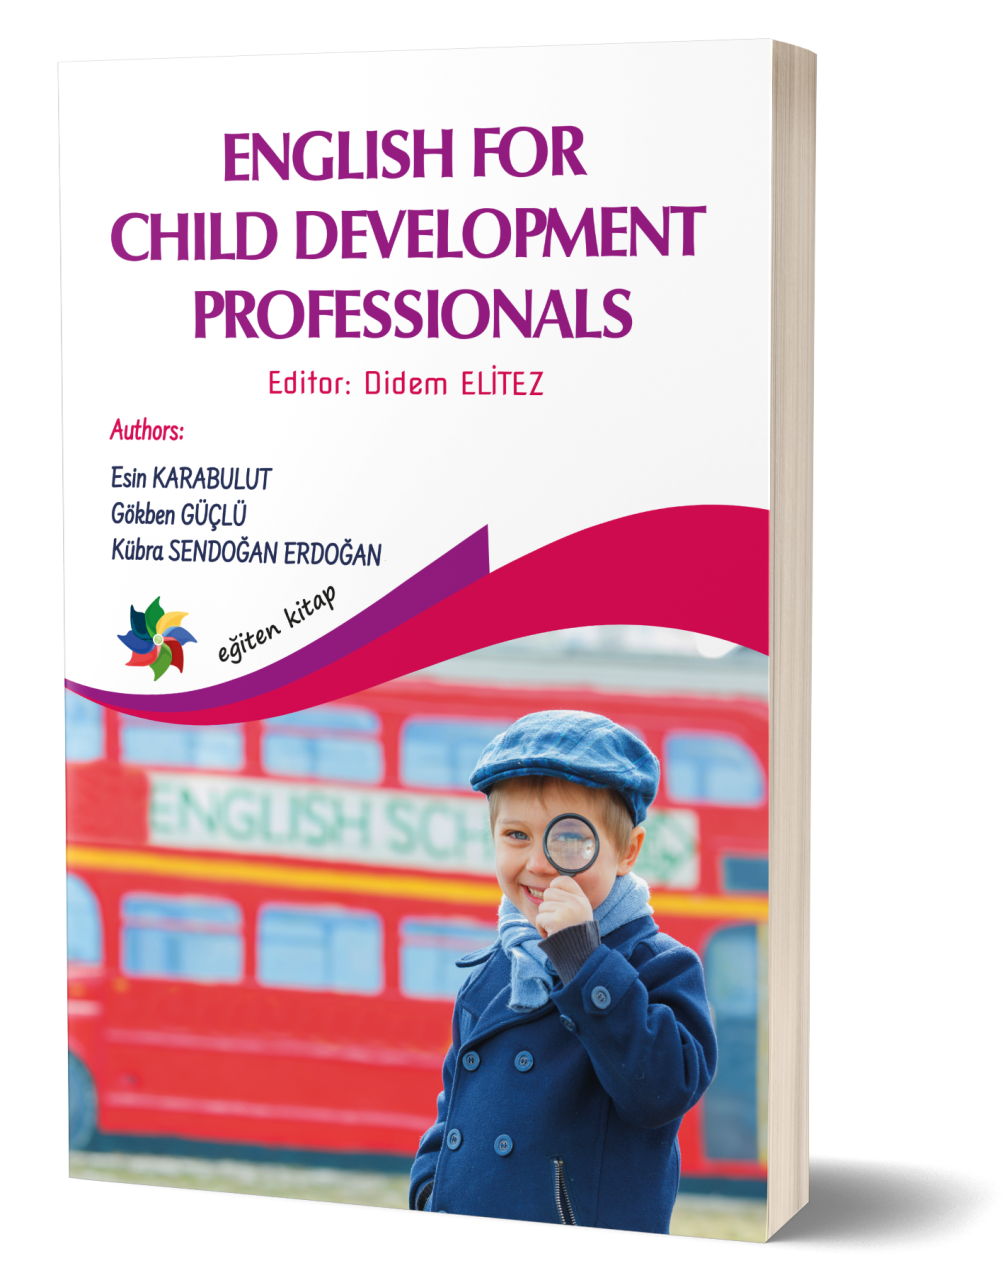 ENGLISH FOR CHILD DEVELOPMENT PROFESSIONALS